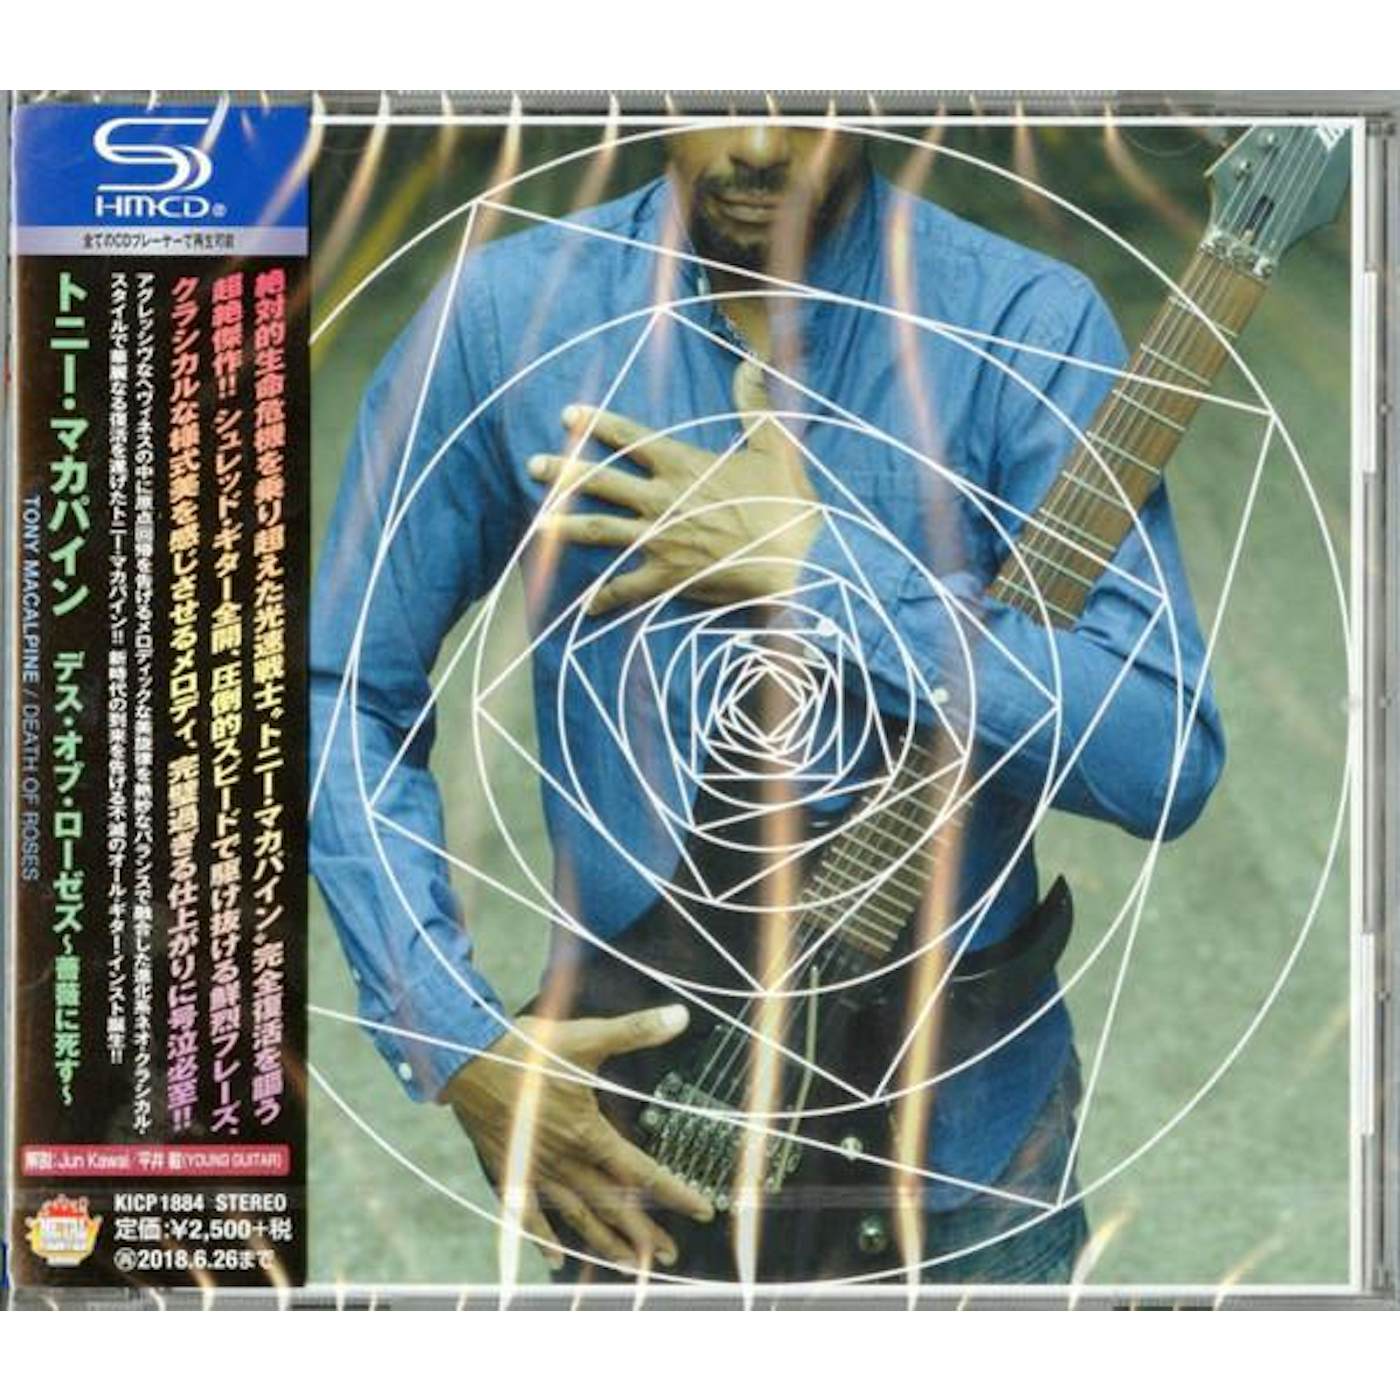 Tony MacAlpine DEATH OF ROSES (SHM-CD) CD